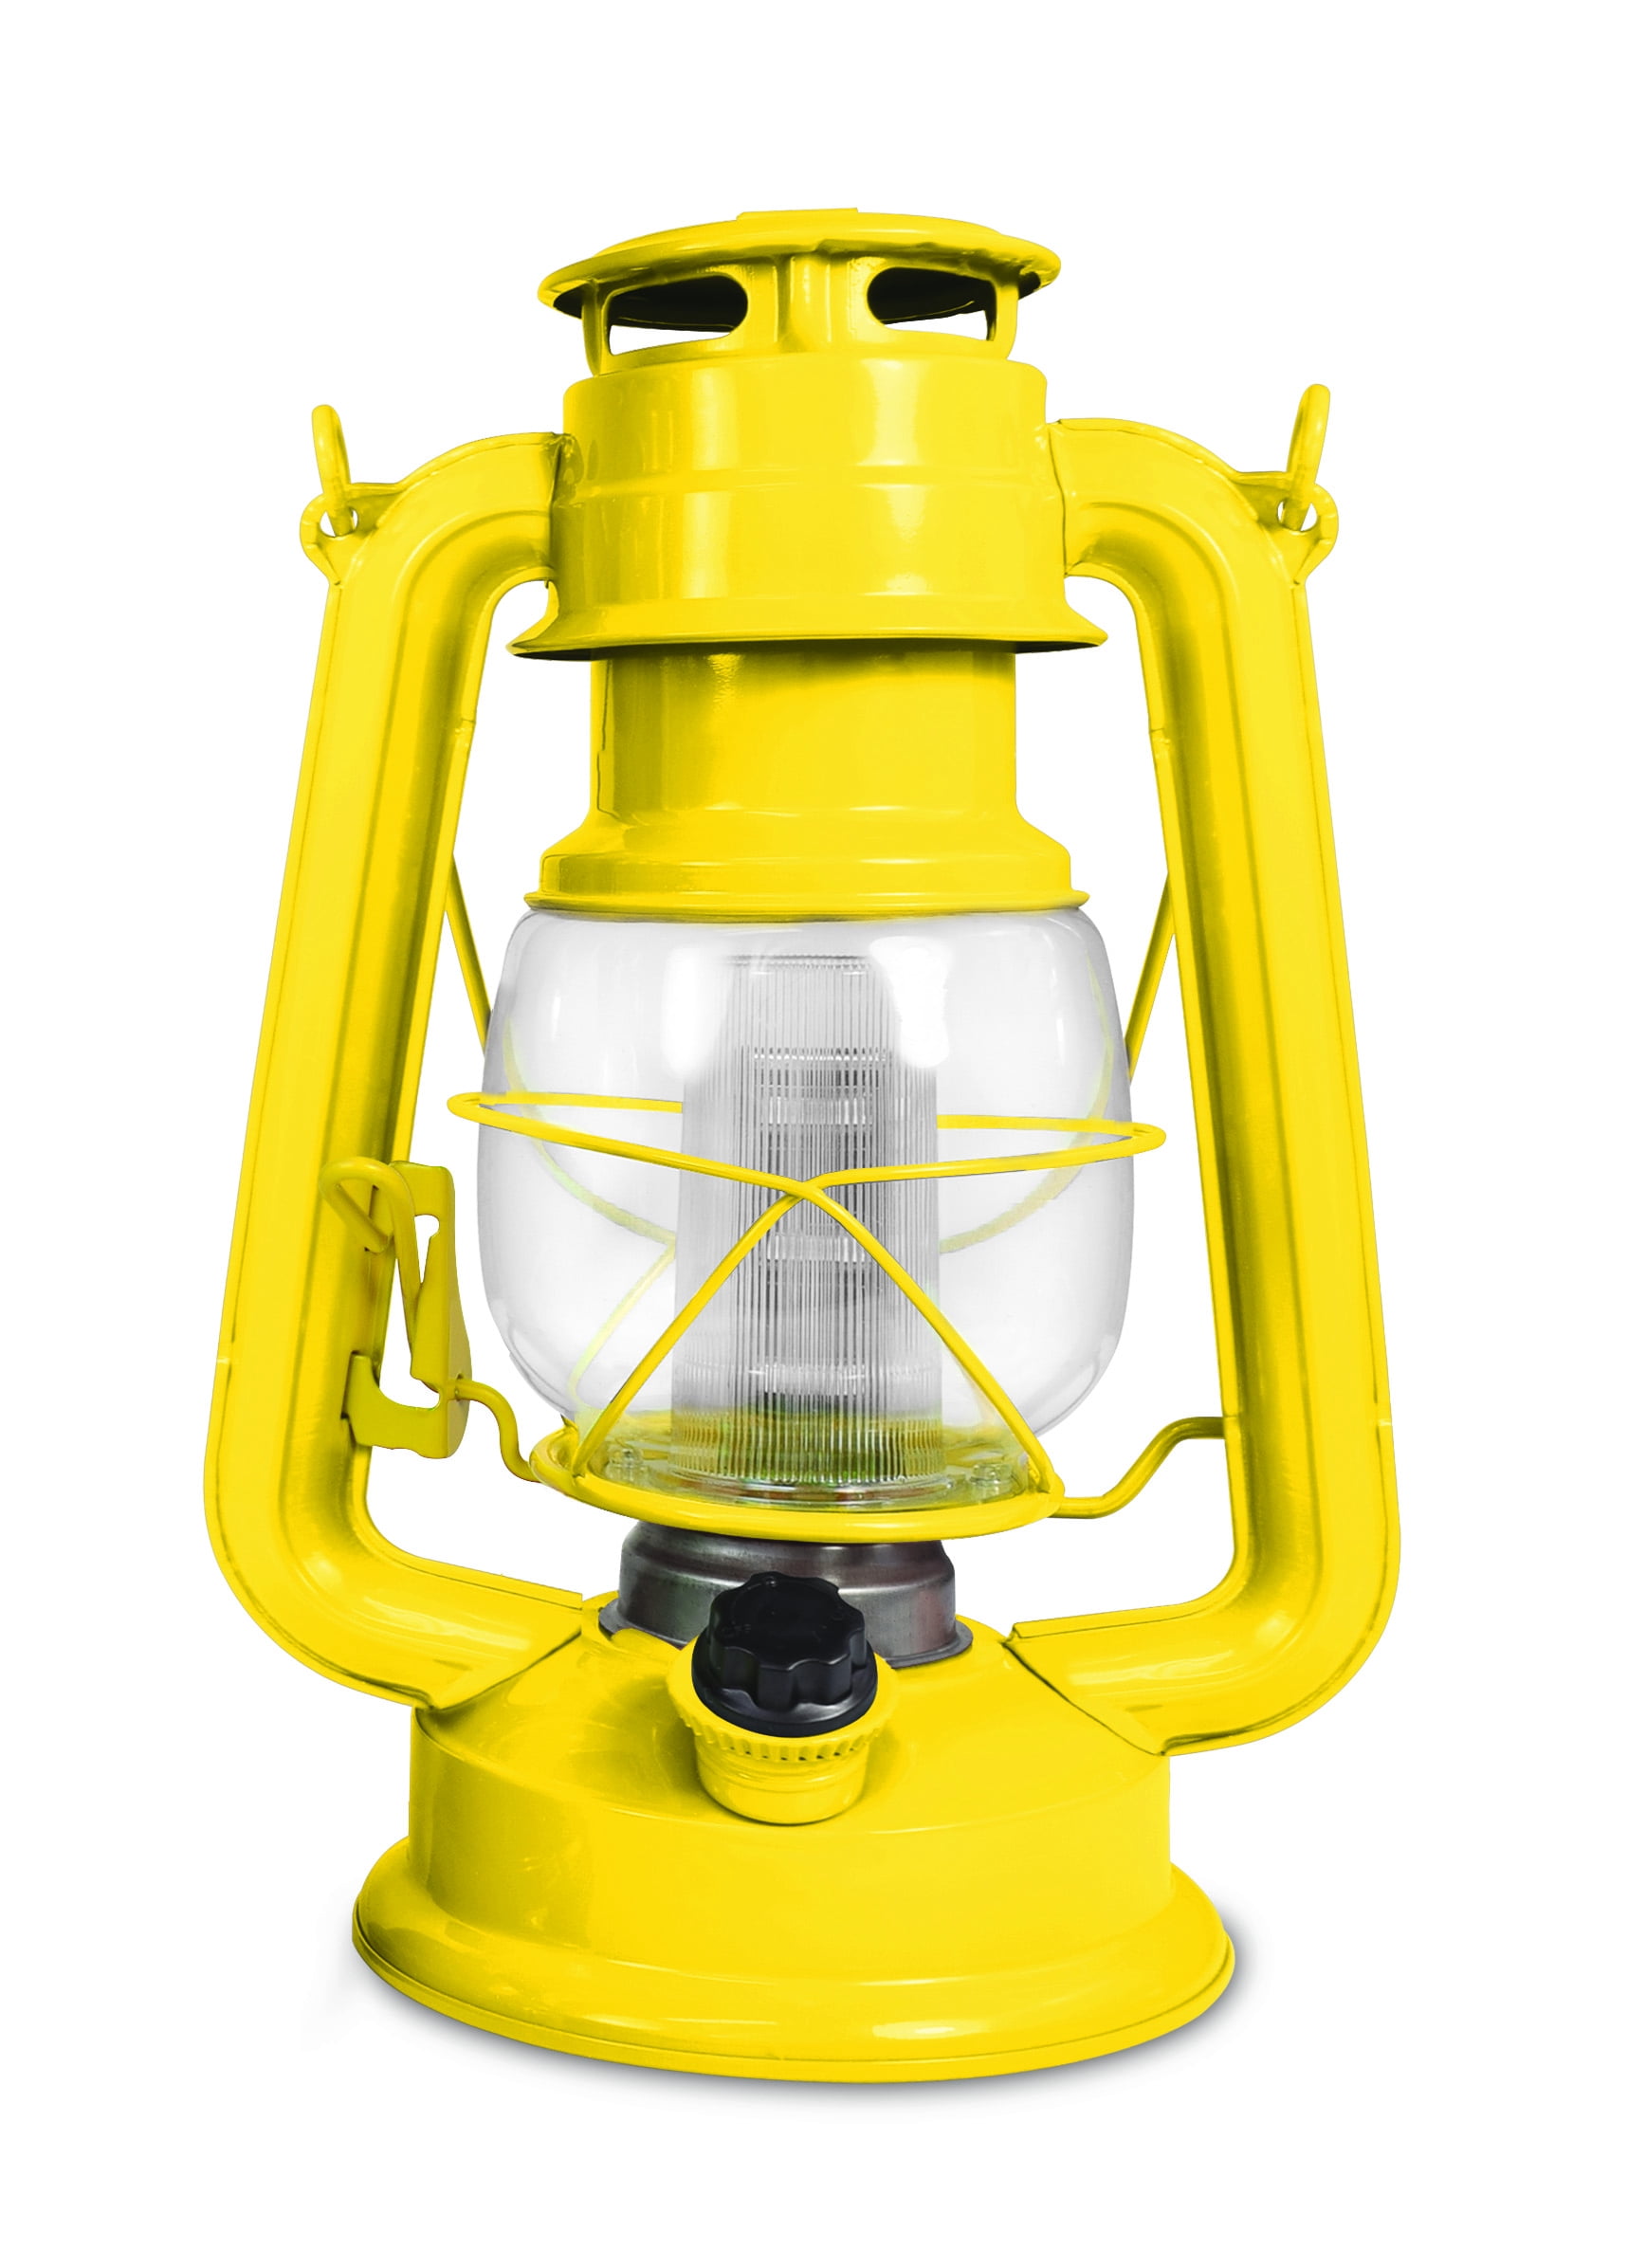 Northpoint LED Lantern, 12-LED 150-Lumen Lantern, Copper Indoor Outdoor  Lantern, Home Decor Vintage Lantern, Battery Operated Hanging or Tabletop  Hurricane Lantern 